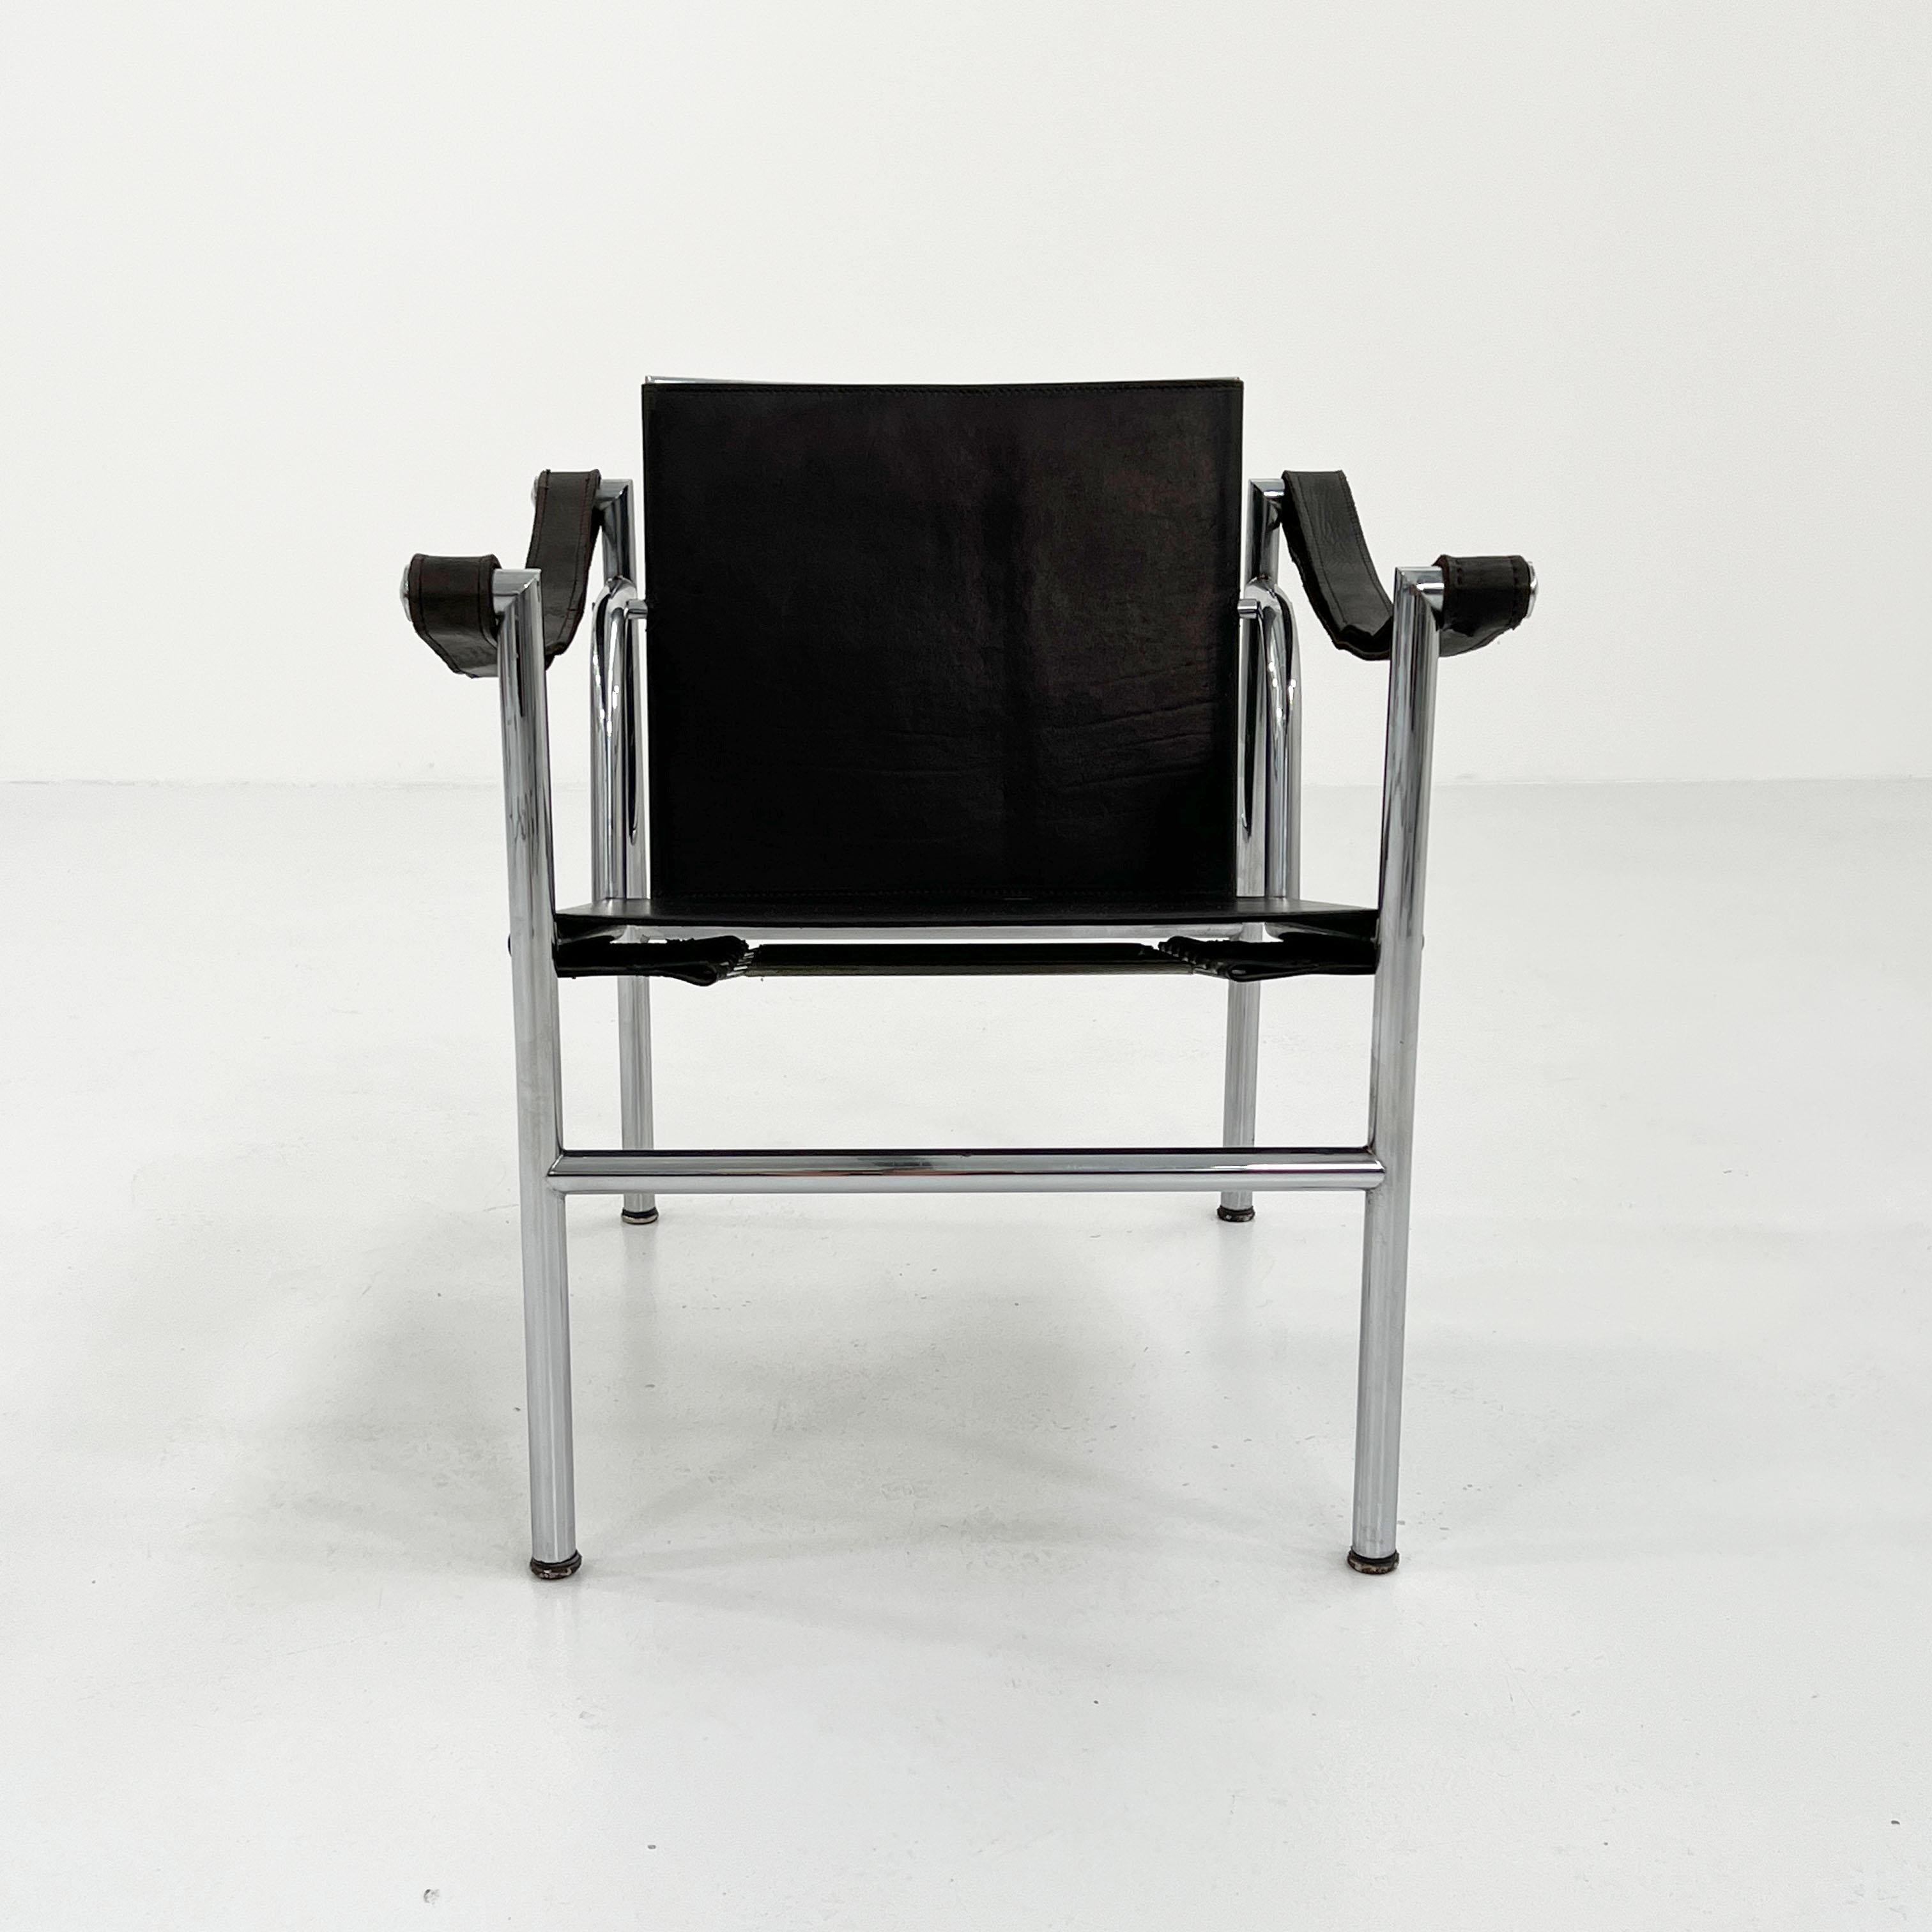 LC1 Armchair by Le Corbusier for Cassina, 1970s
Designer - Le Corbusier, Pierre Jeanneret and Charlotte Perriand
Producer - Cassina
Model - LC1 Armchair
Design Period - Seventies
Measurements - Width 54 cm x Depth 65 cm x Height 65 cm x Seat